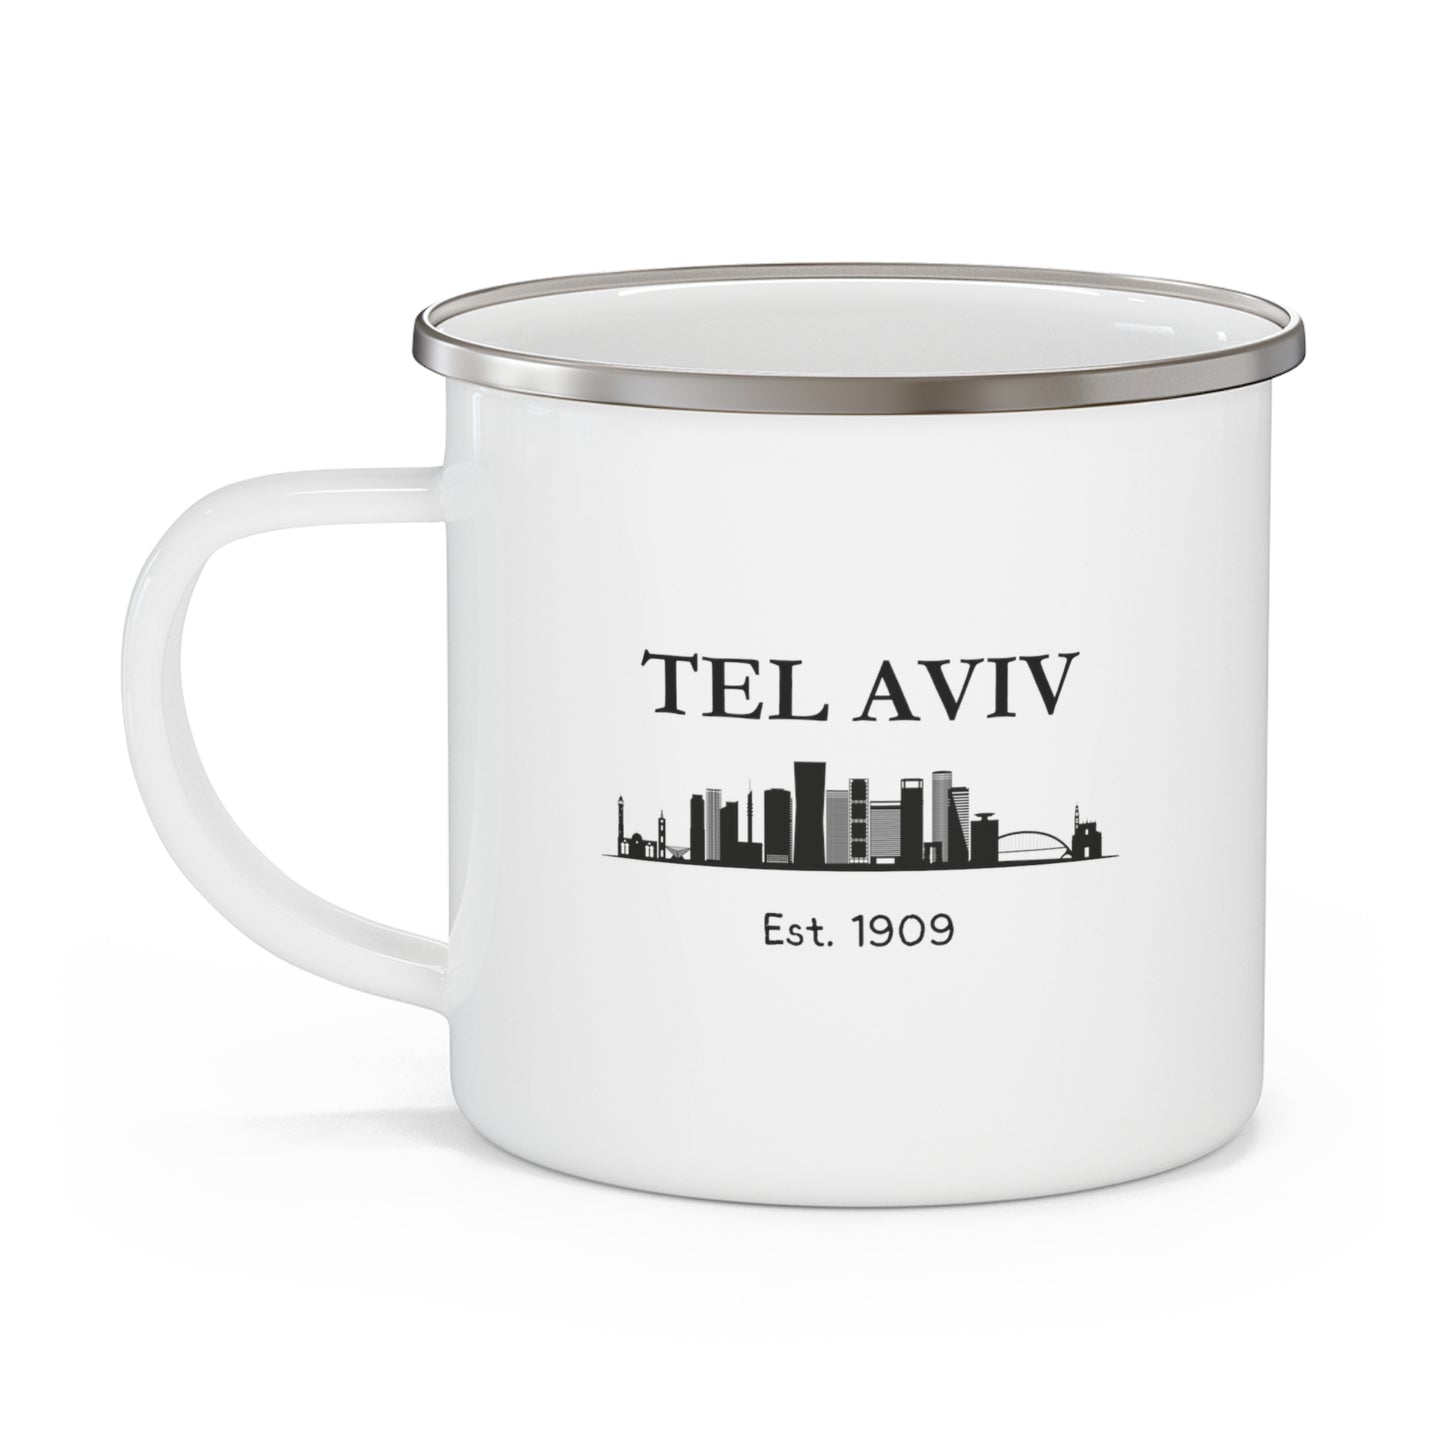 Tel Aviv - Est. 1909... Enamel Camping Mug